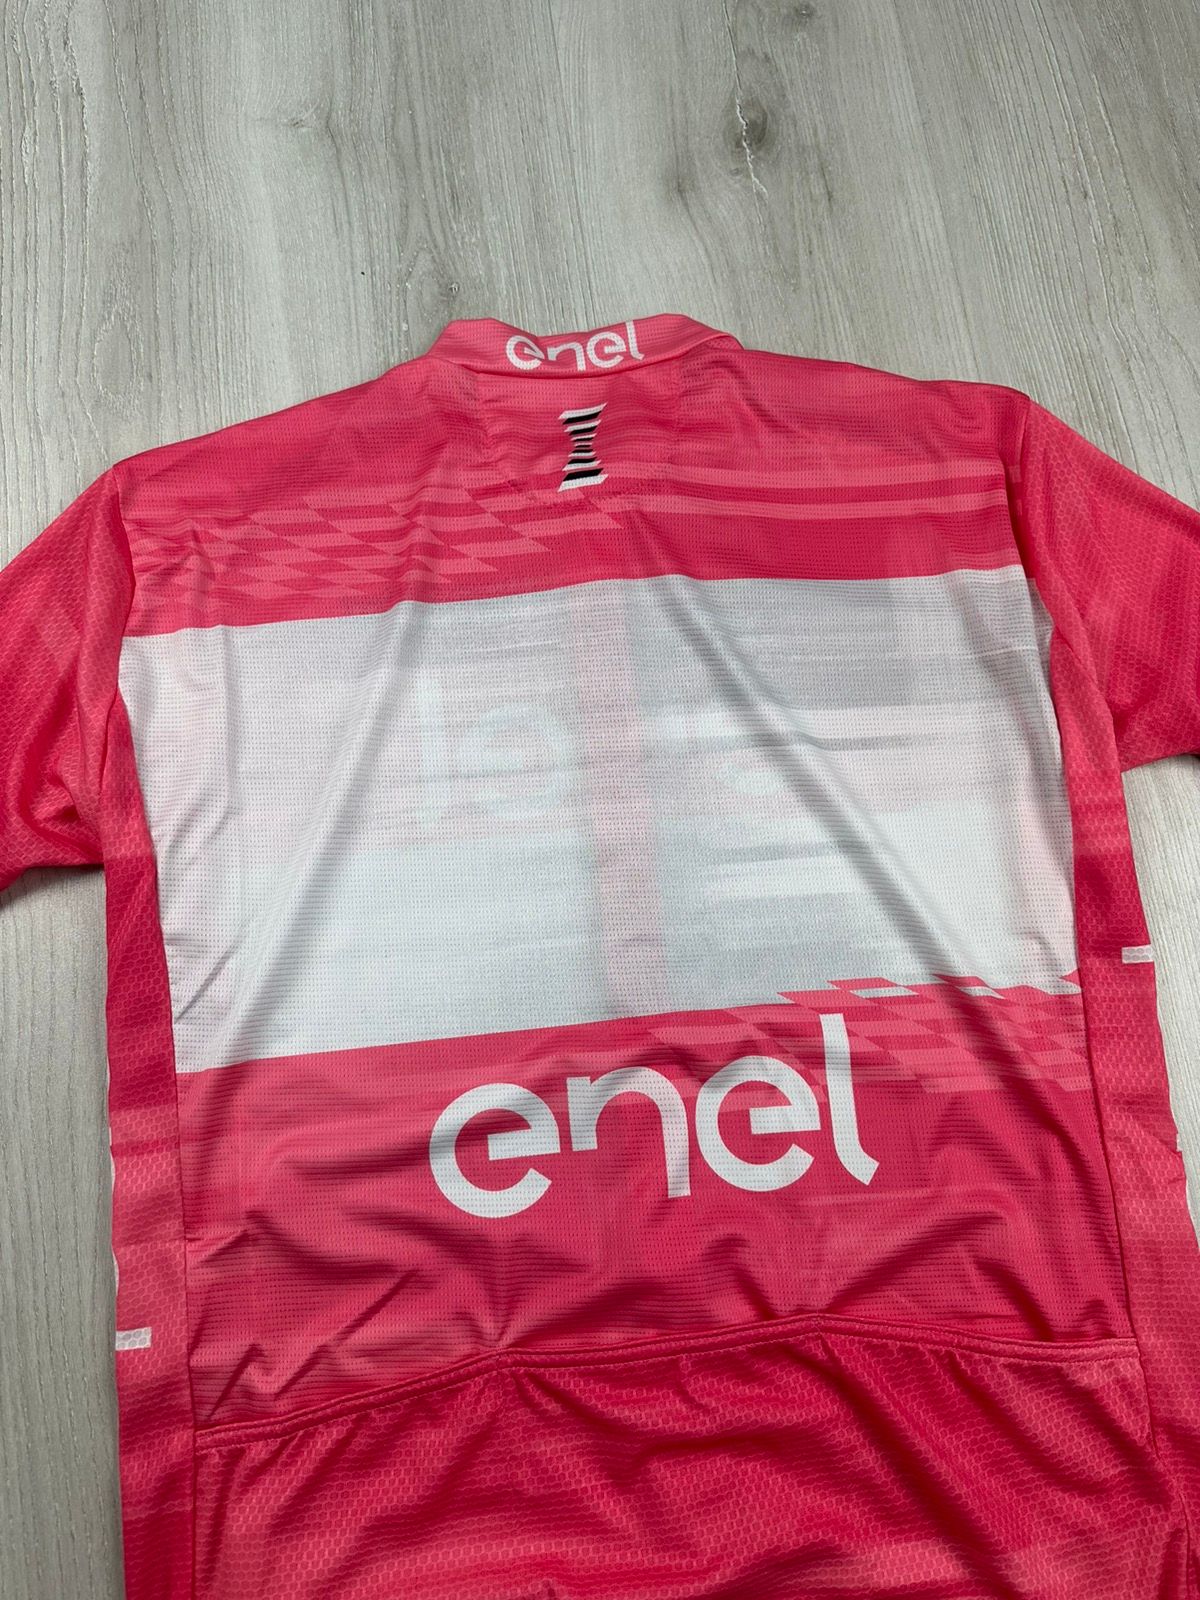 Cycle Castelli x Giro D italia Cycling Shirt Jersey Size US XL / EU 56 / 4 - 9 Thumbnail